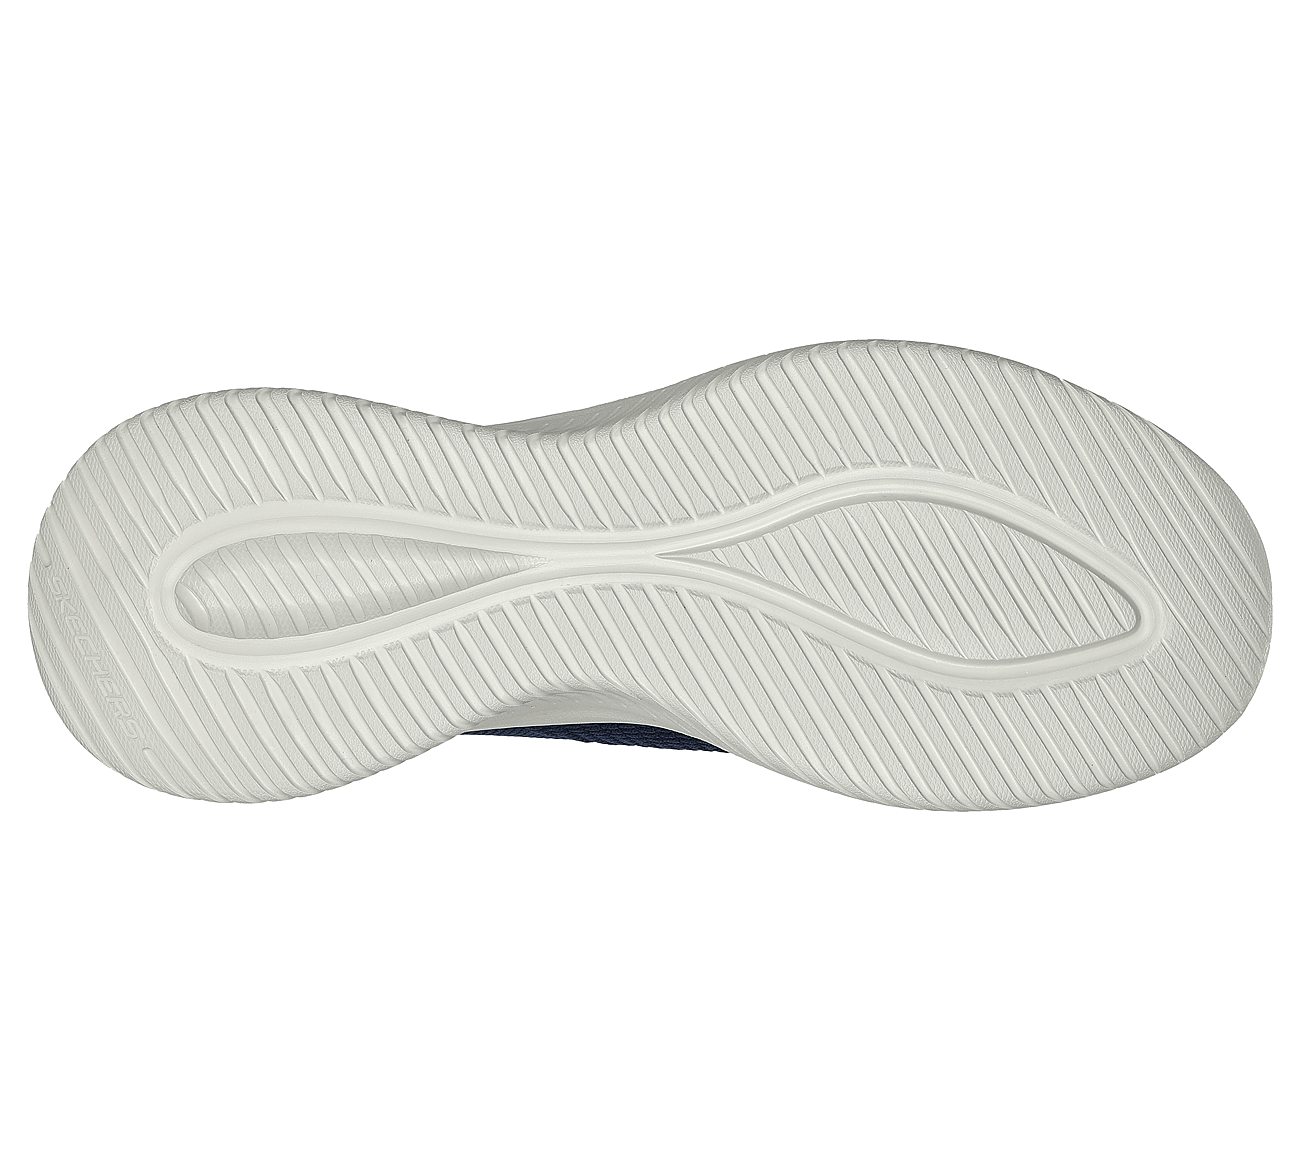 ULTRA FLEX 3.0 - VIEWPOINT, NAVY/ORANGE Footwear Bottom View